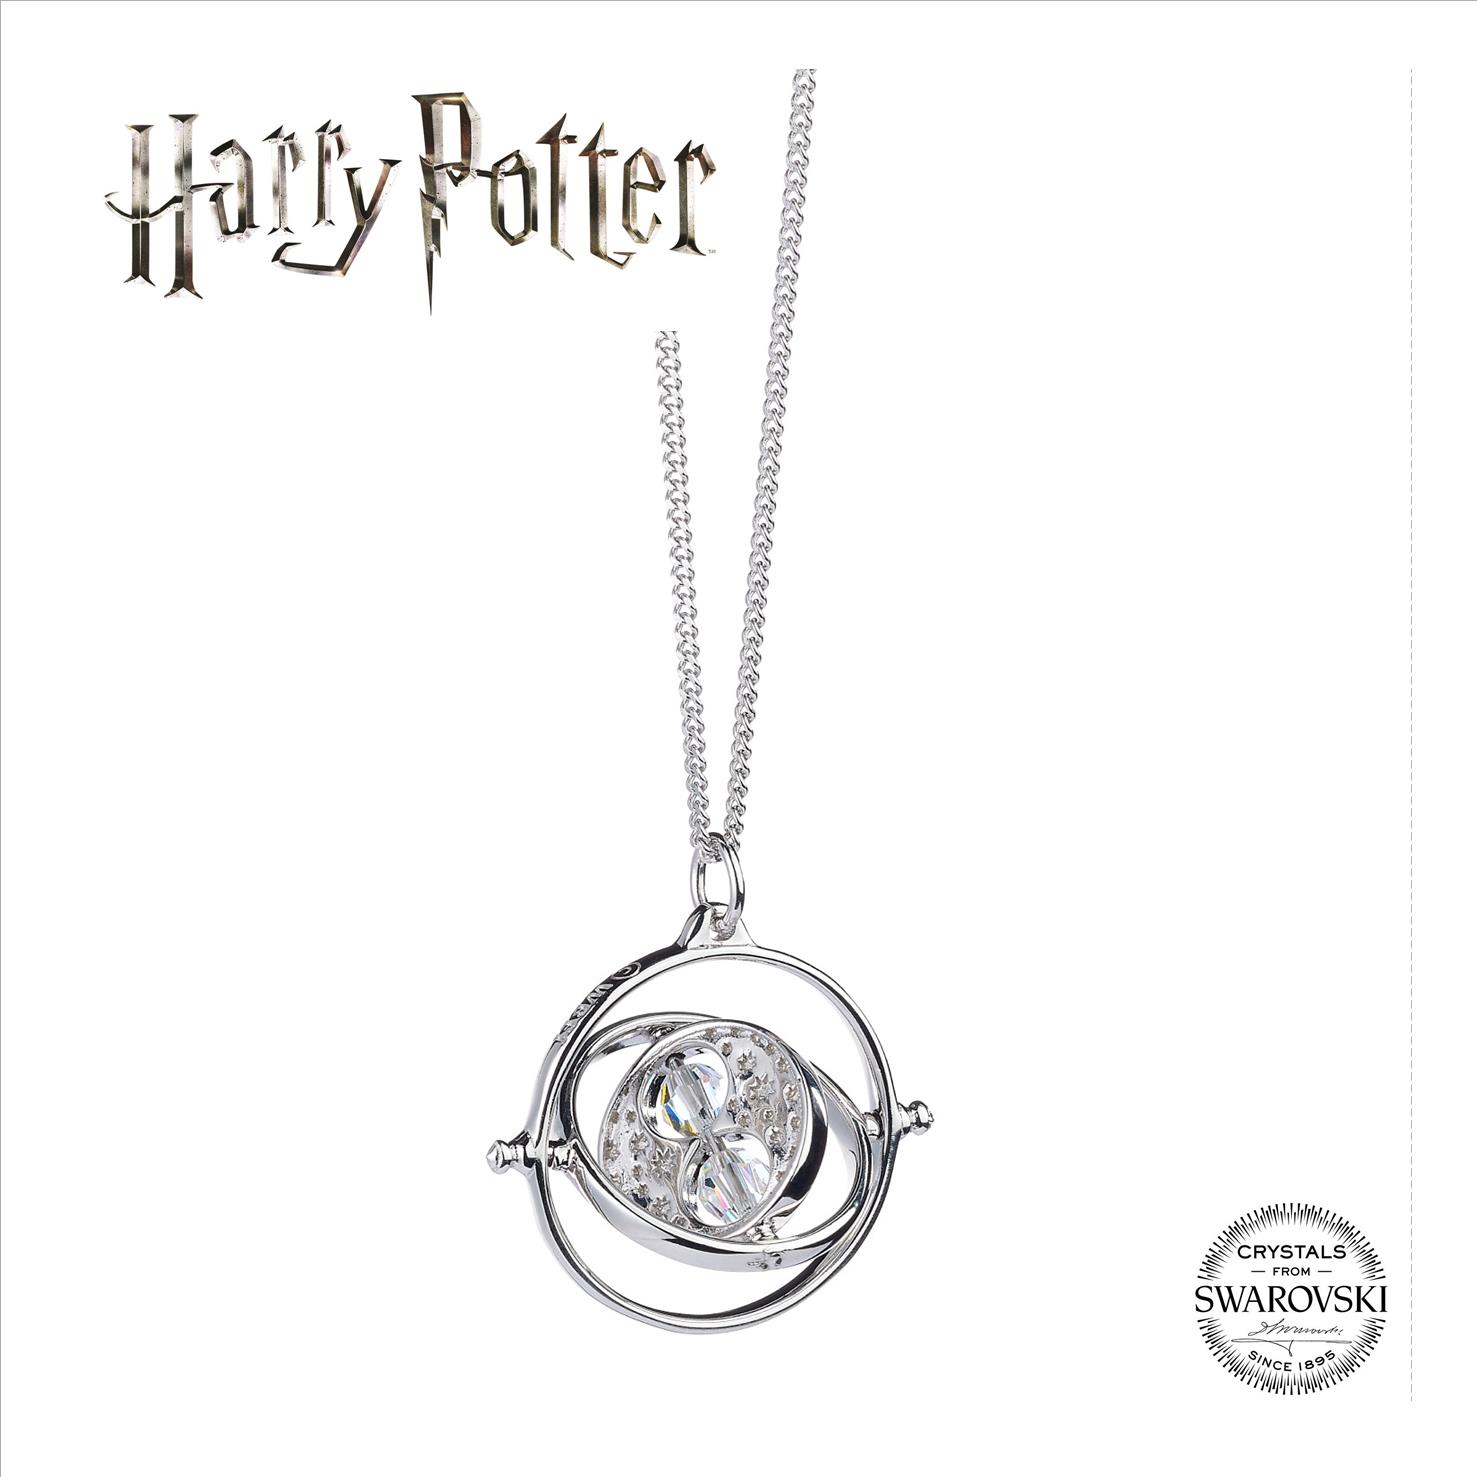 Harry Potter Gold Plated Spinning Time Turner Necklace | eBay